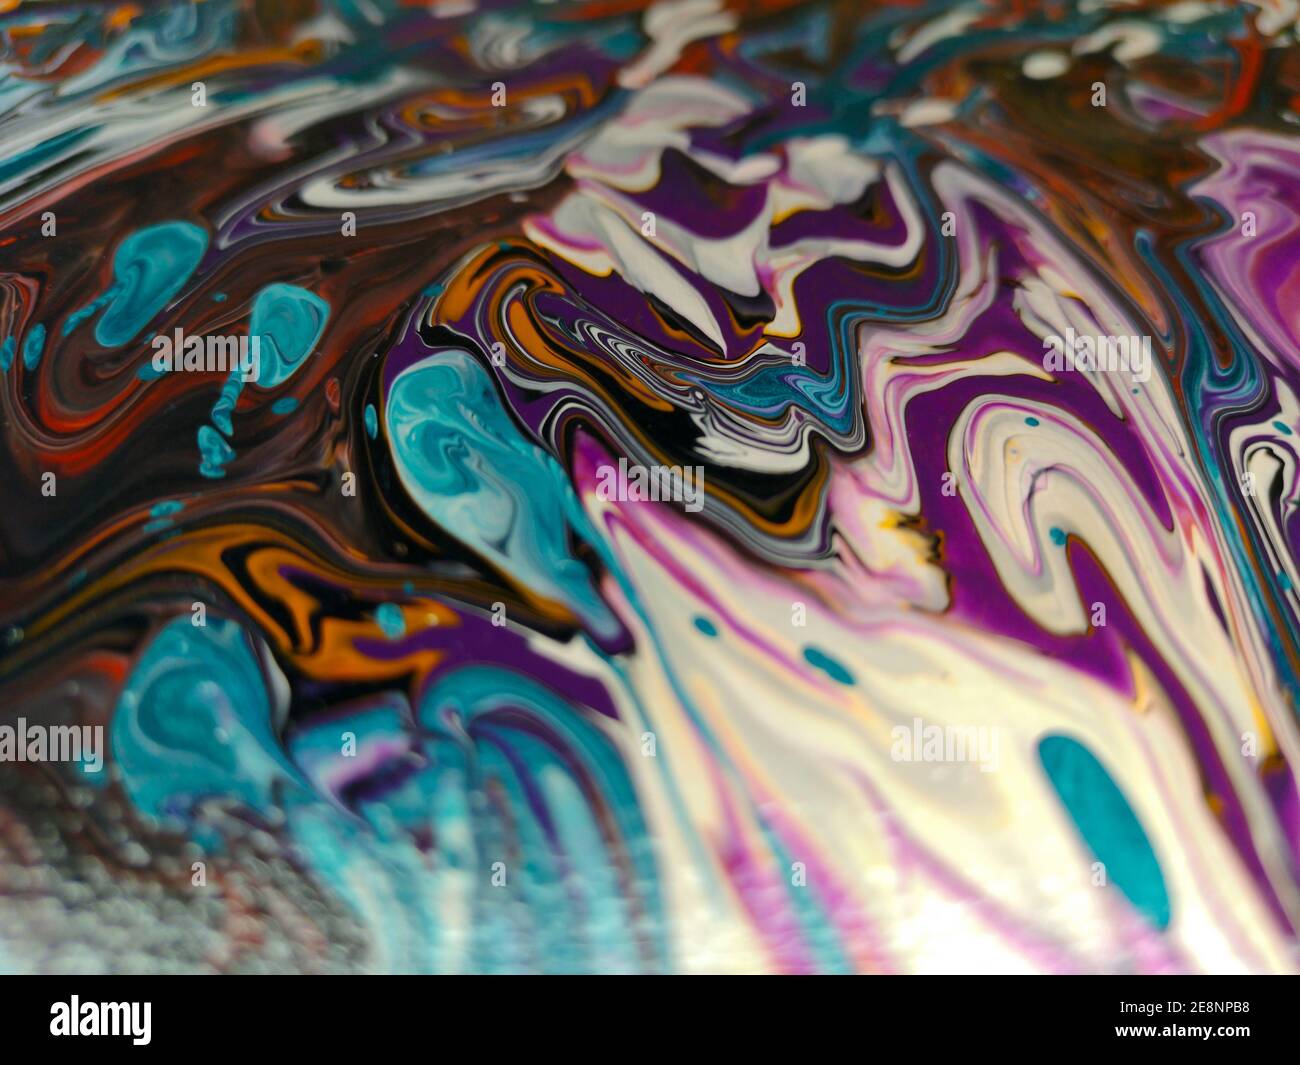 Fluid Art Texture Vibrant Wall With Liquid Acrylic Paint Effect